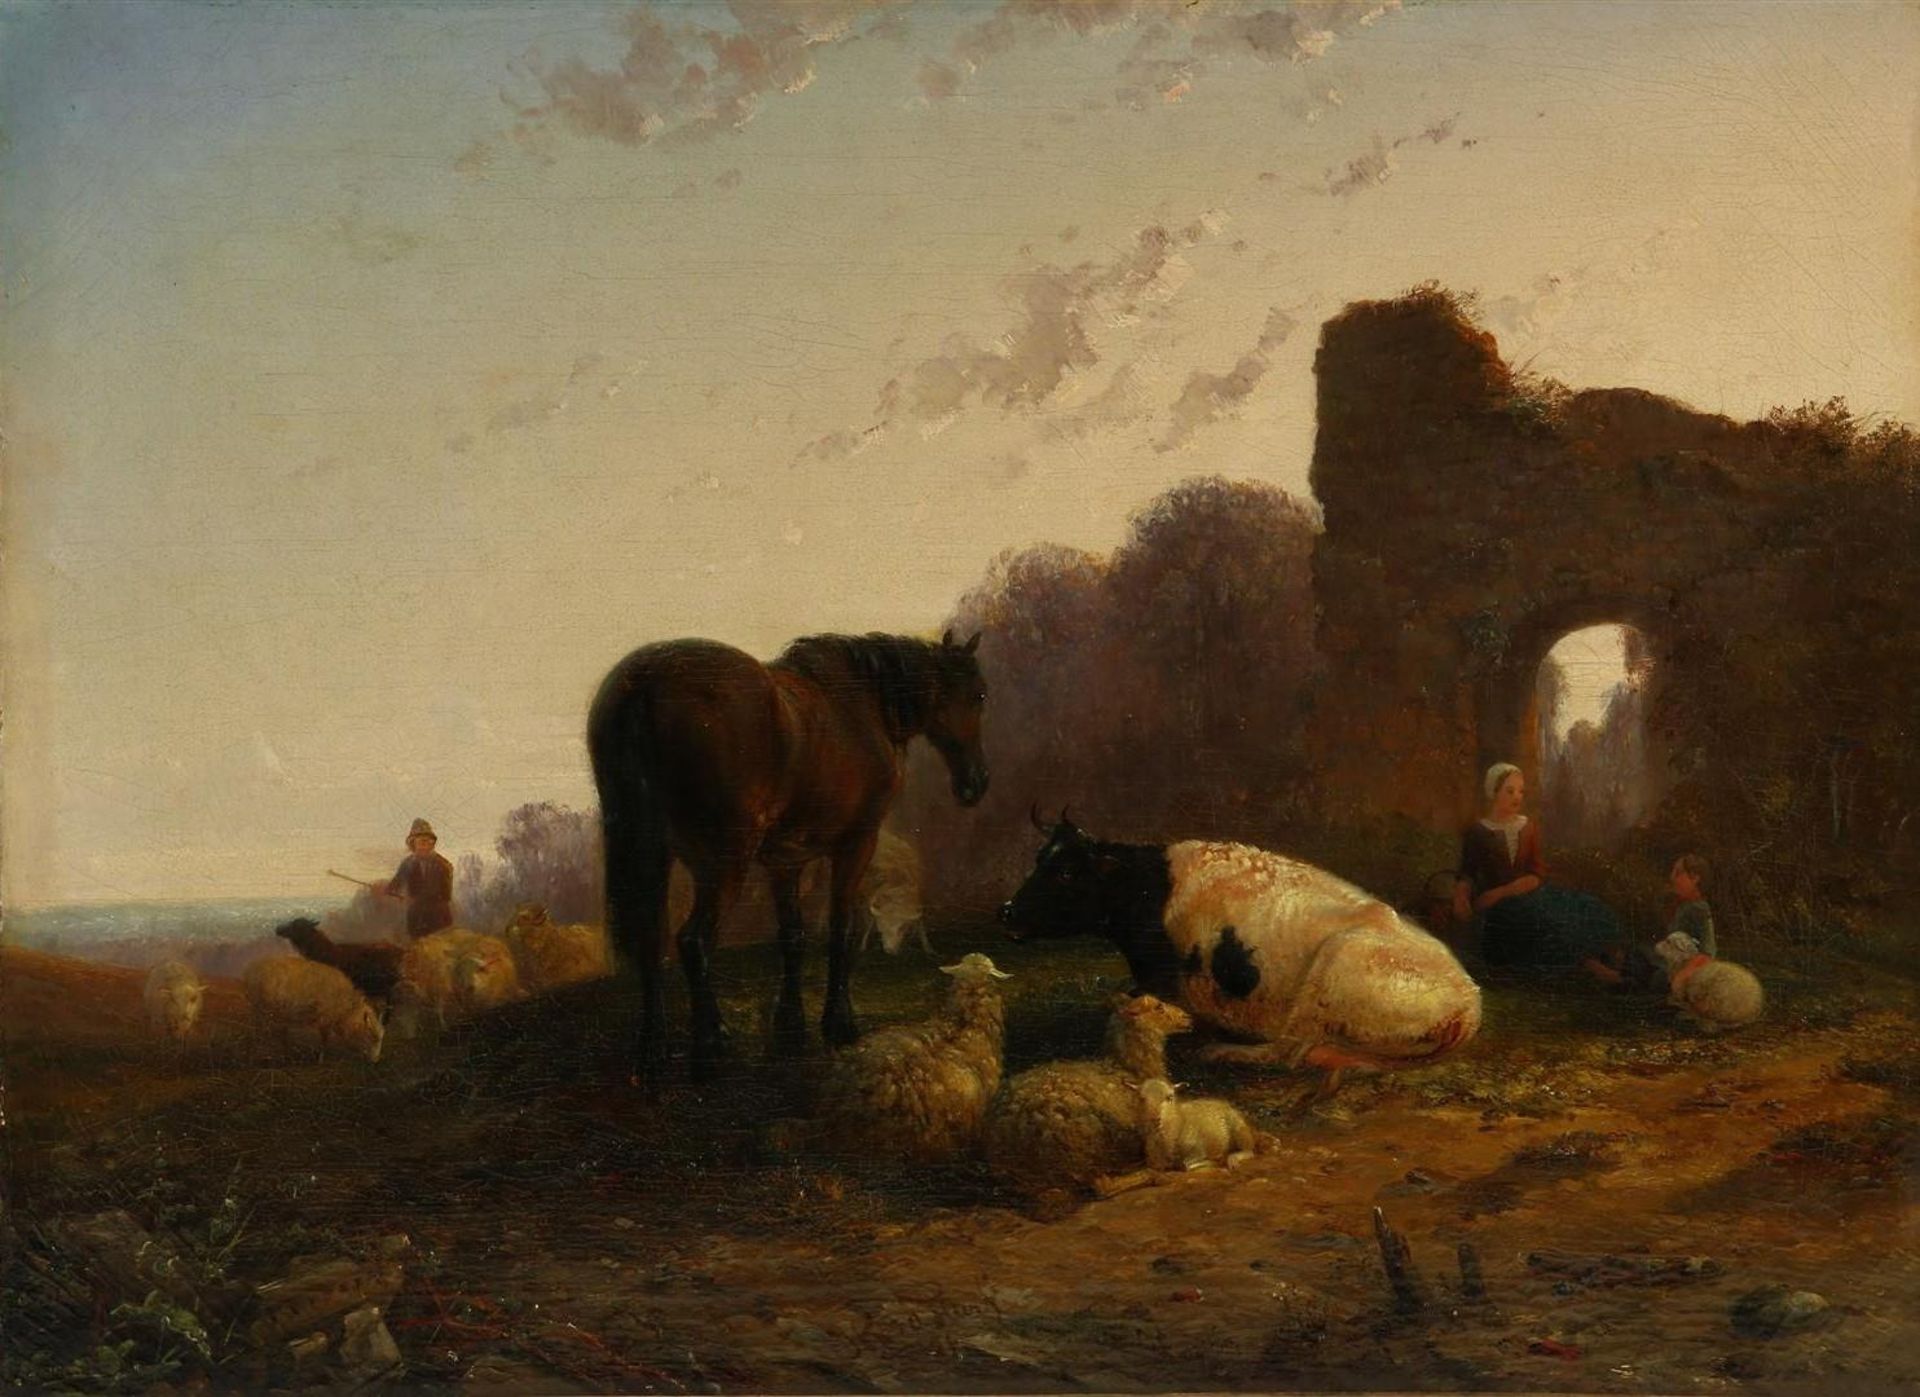 Helmert Richard van der Flier (1827-1899) Heath with shepherd and cattle, signed bottom center.